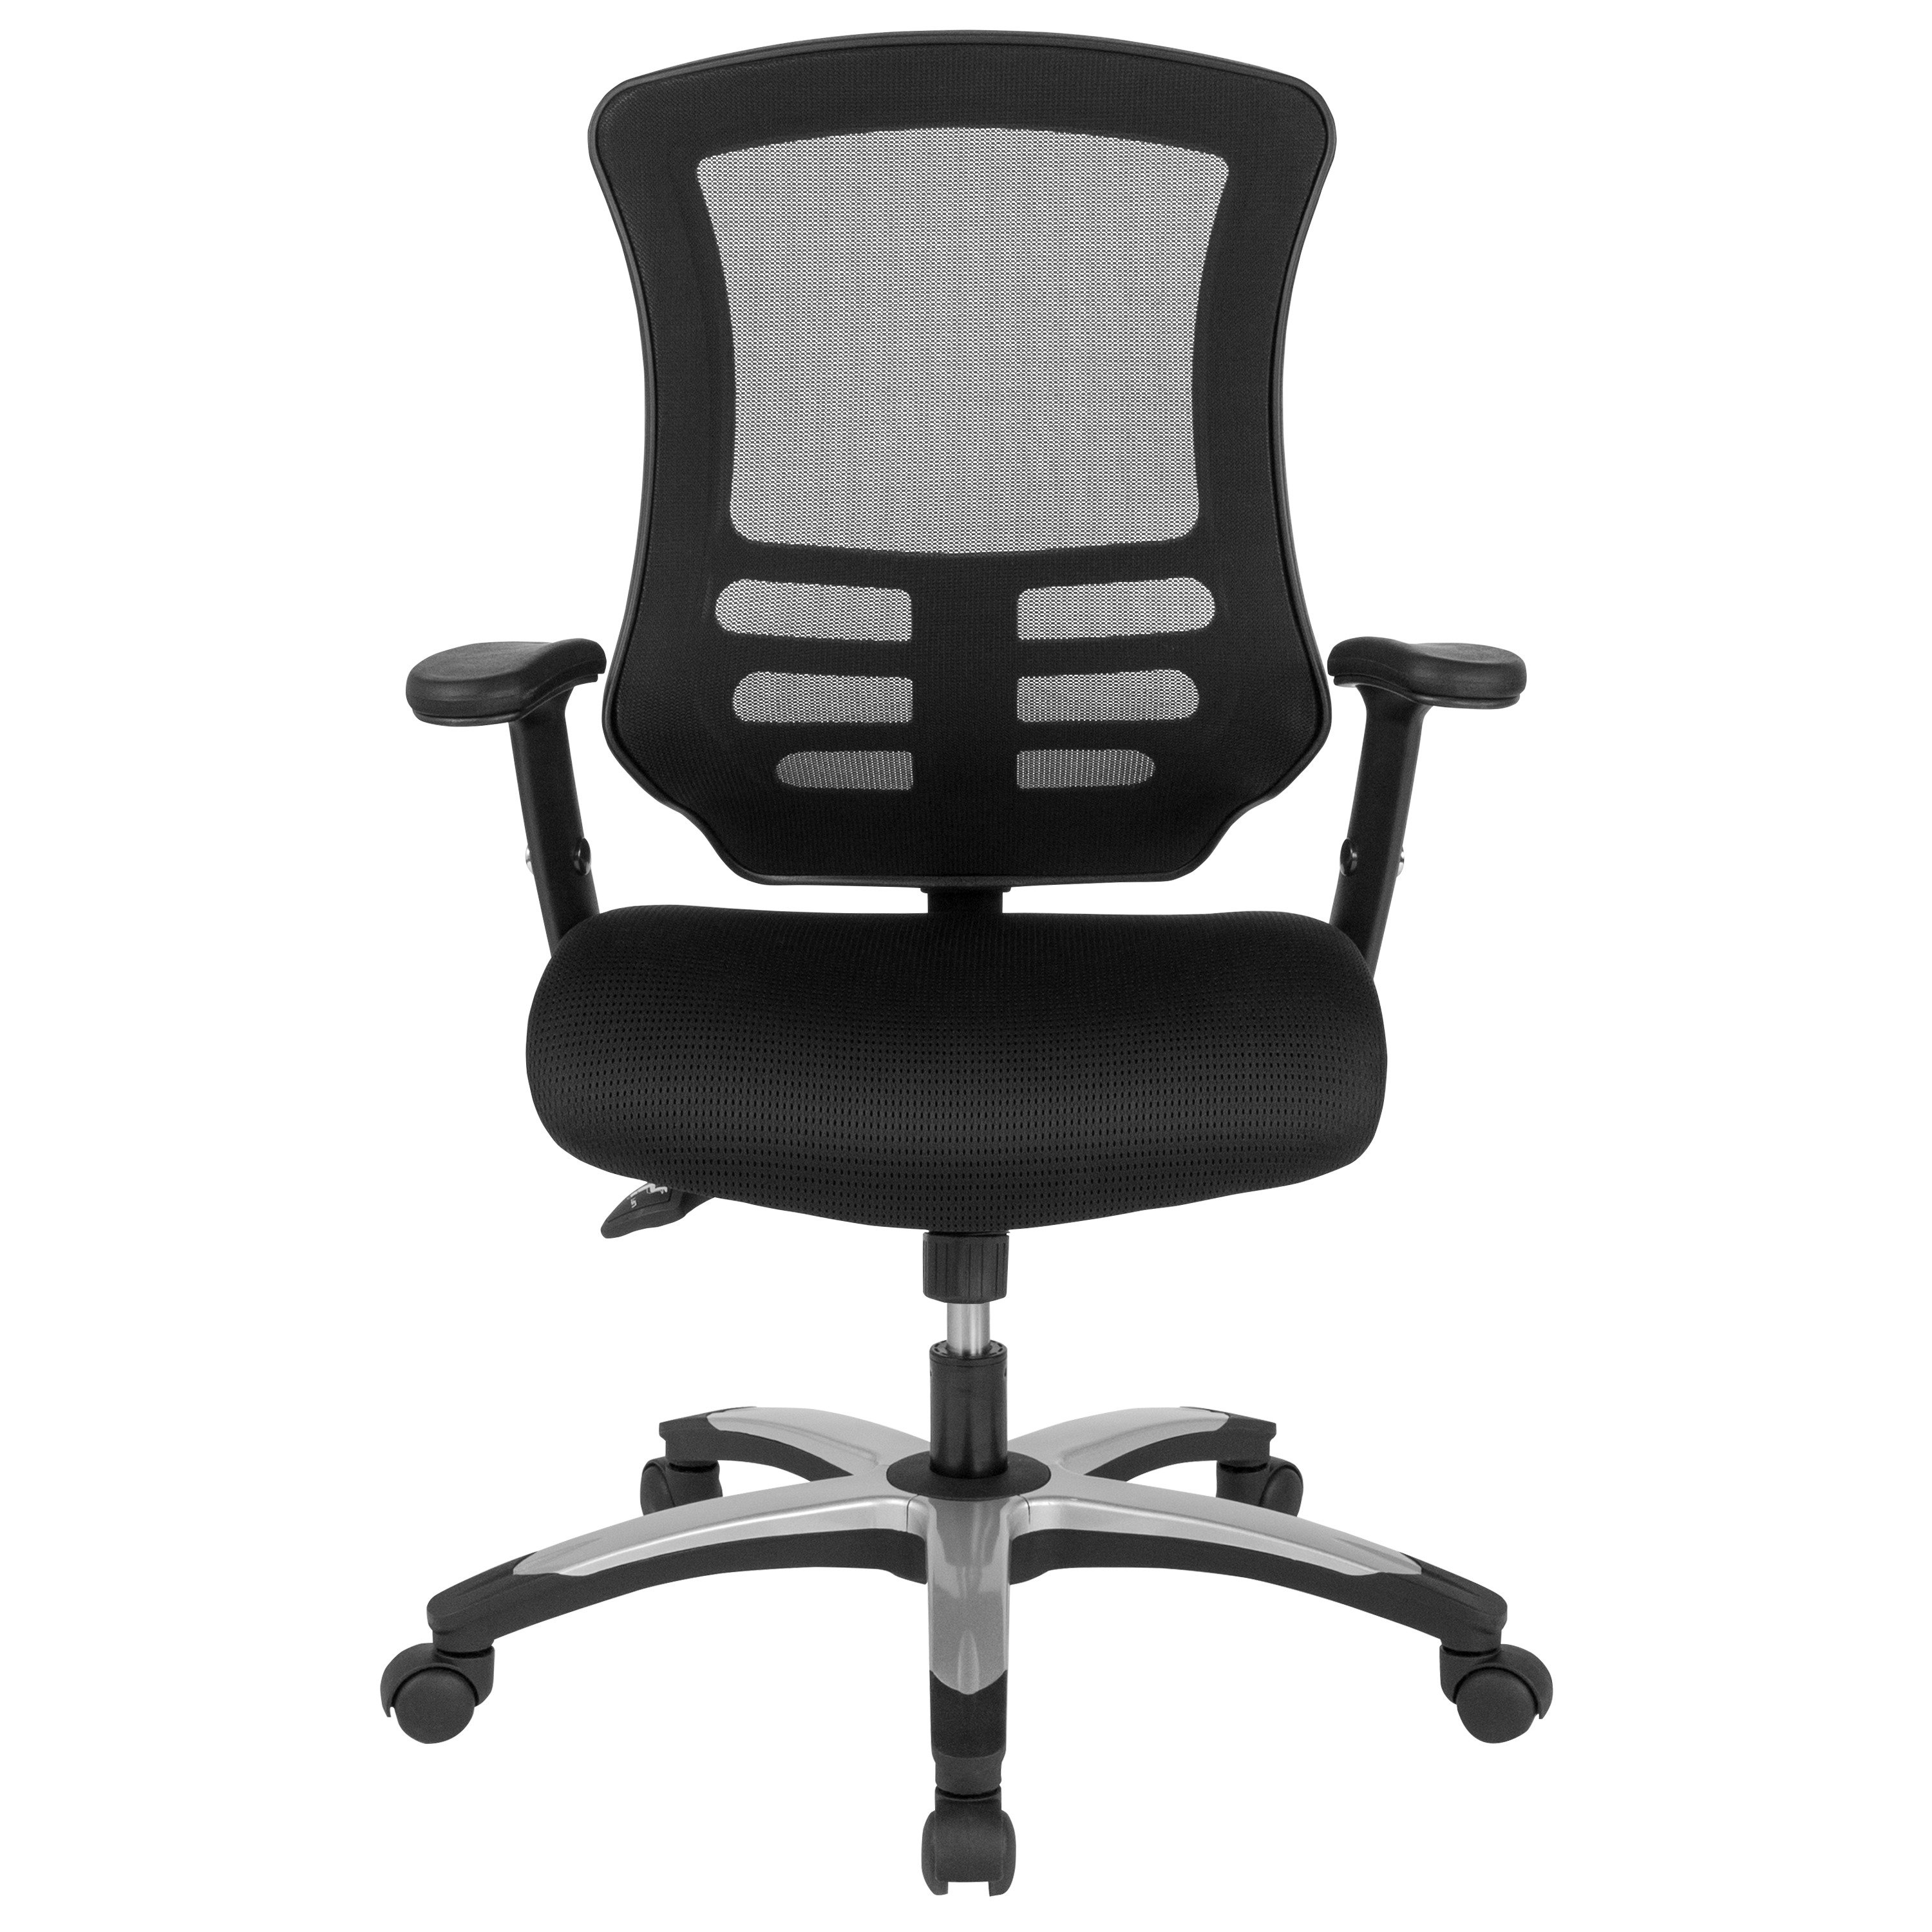 Oline ErgoPro Ergonomic Office Chair w/ Reclining Backrest & Blade Wheels, Black